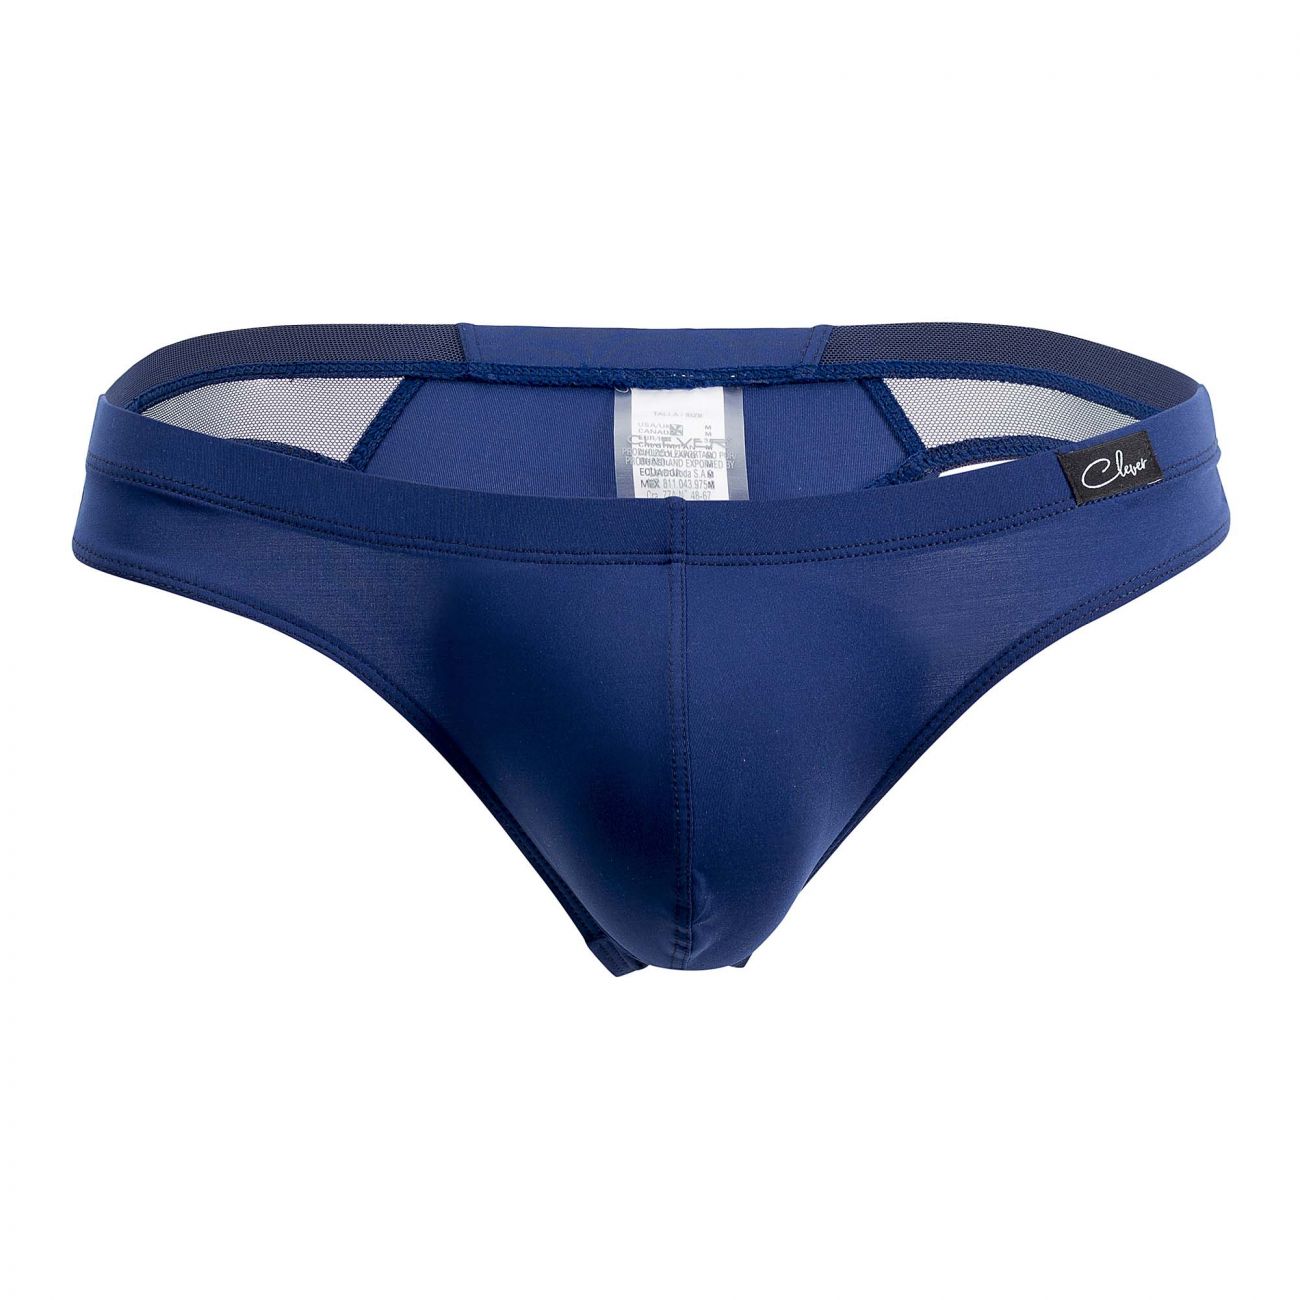 Mens Underwear: Clever 0204 Safety Thongs | eBay